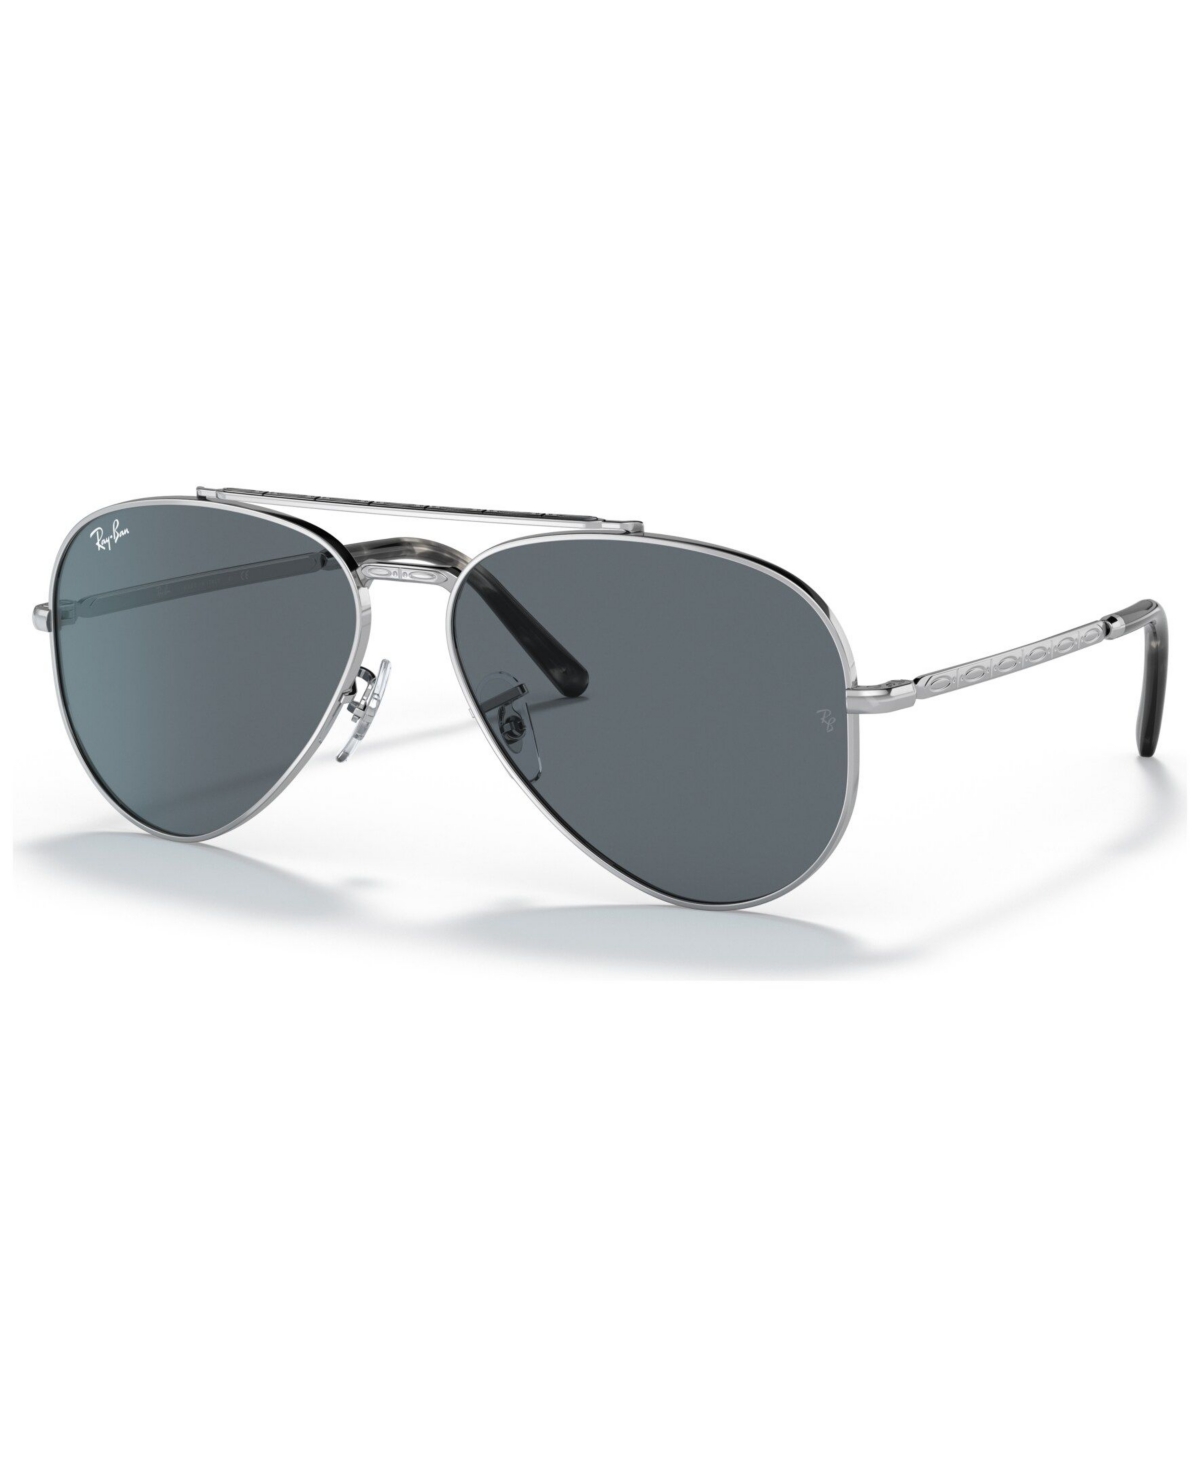 Unisex Sunglasses, RB3625 New Aviator - Silver-Tone